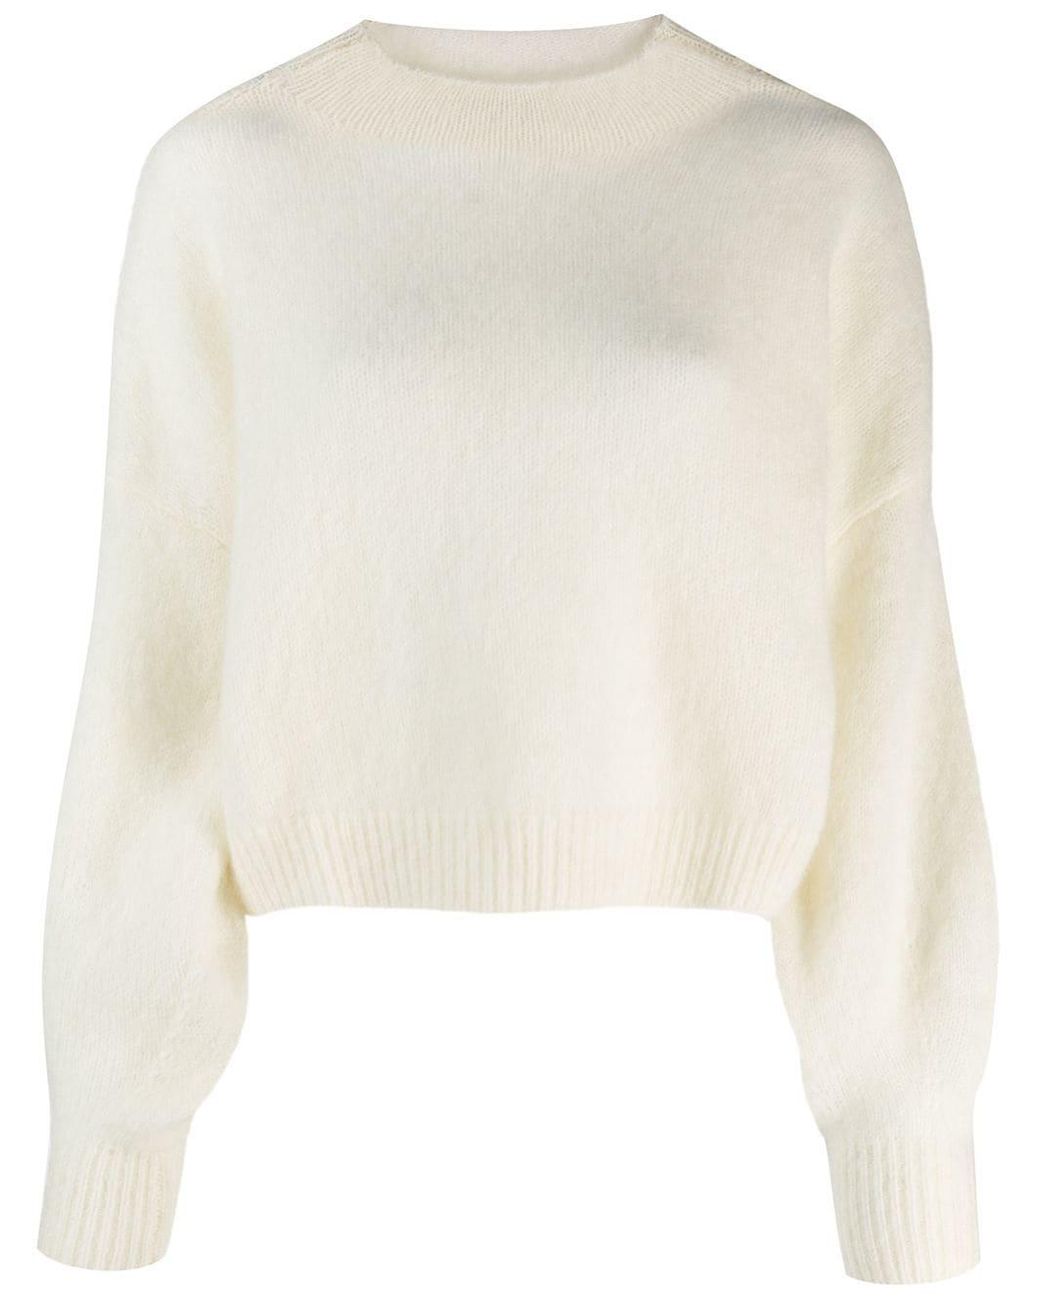 Zimmermann Wool High Neck Sweater in White - Lyst